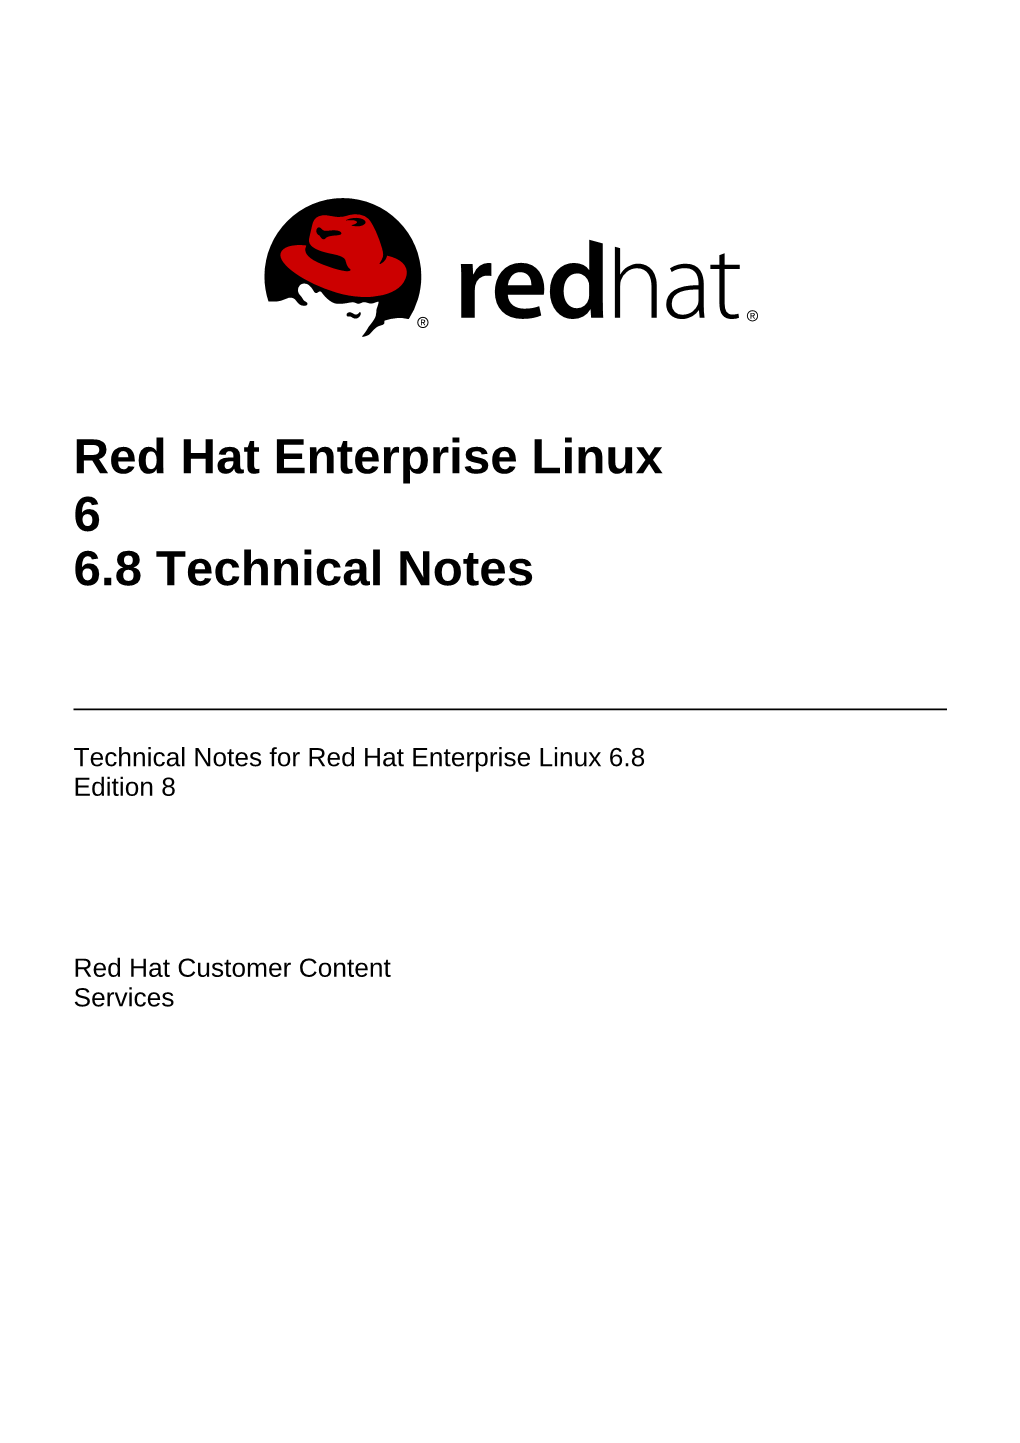 Red Hat Enterprise Linux 6 6.8 Technical Notes